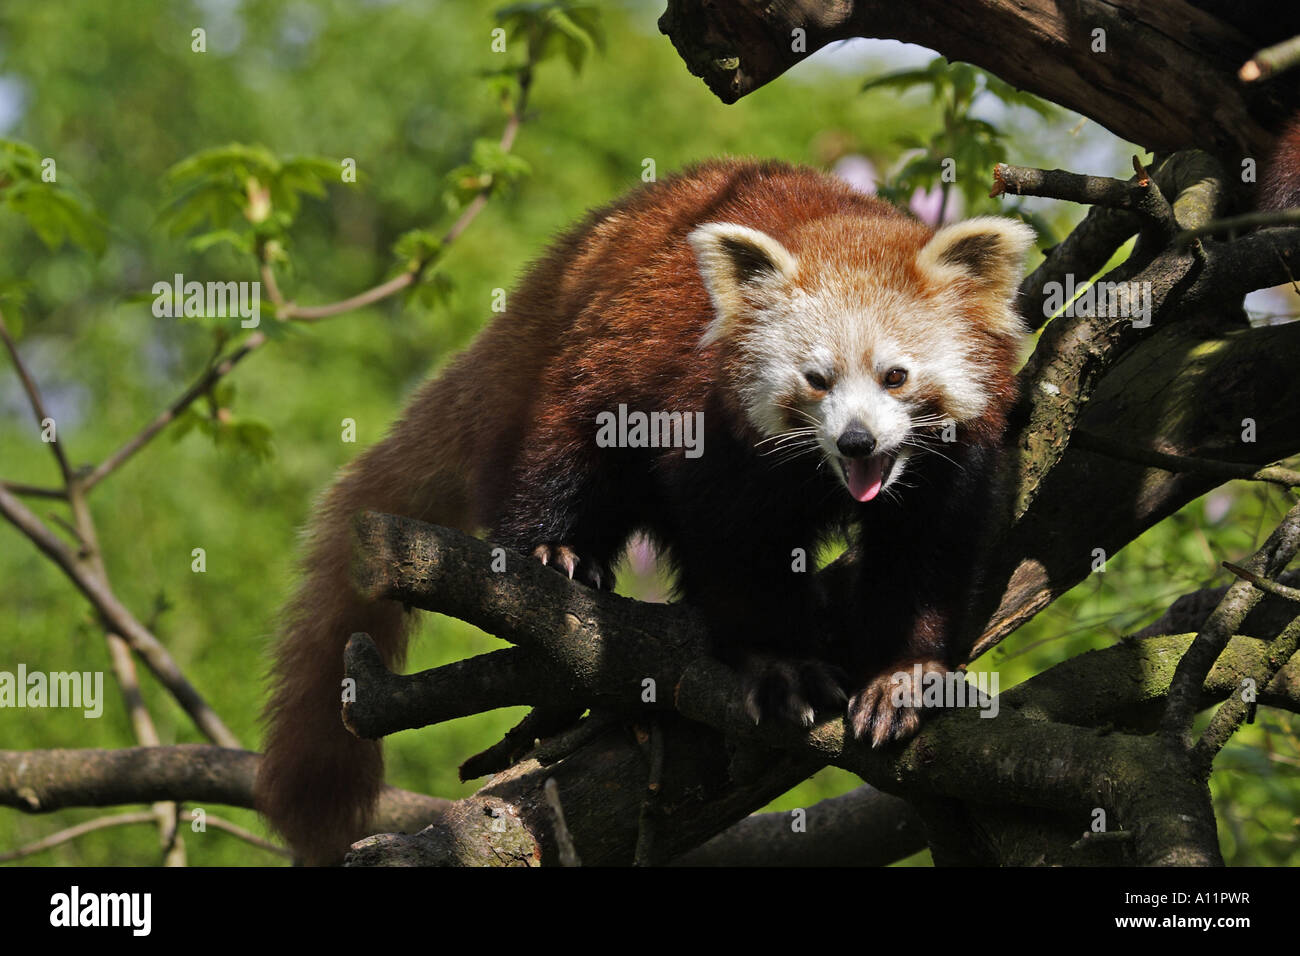 Panda bar -Fotos und -Bildmaterial in hoher Auflösung – Alamy